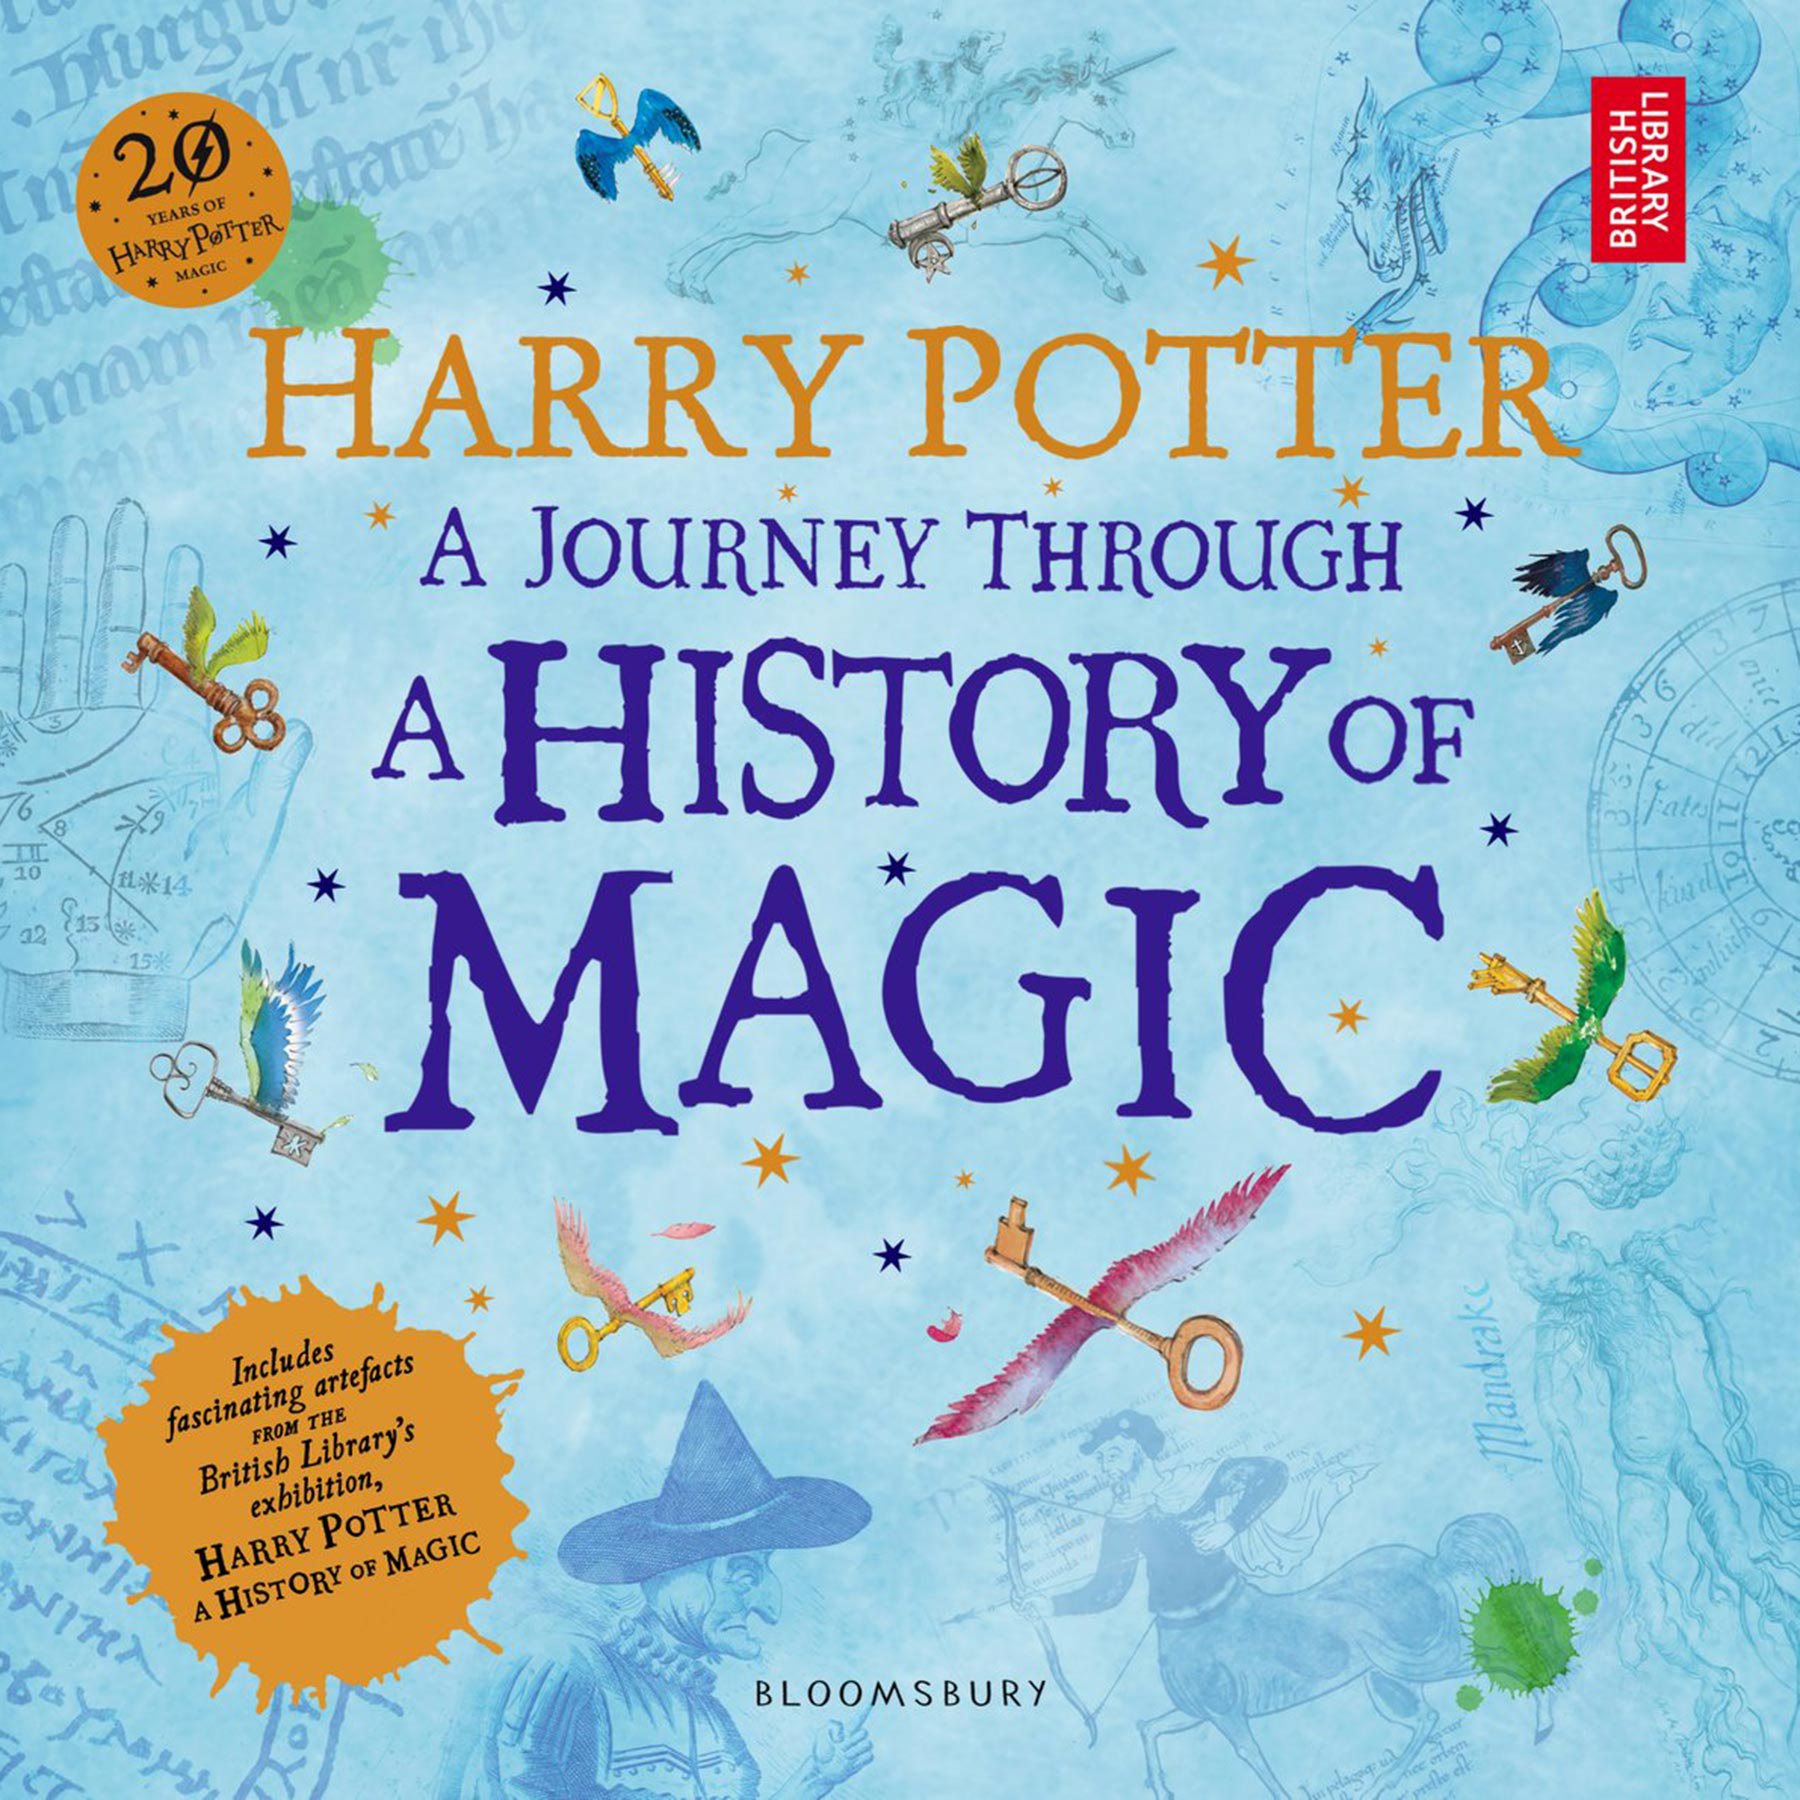 $!Revelan portadas oficiales de dos nuevos libros de Harry Potter